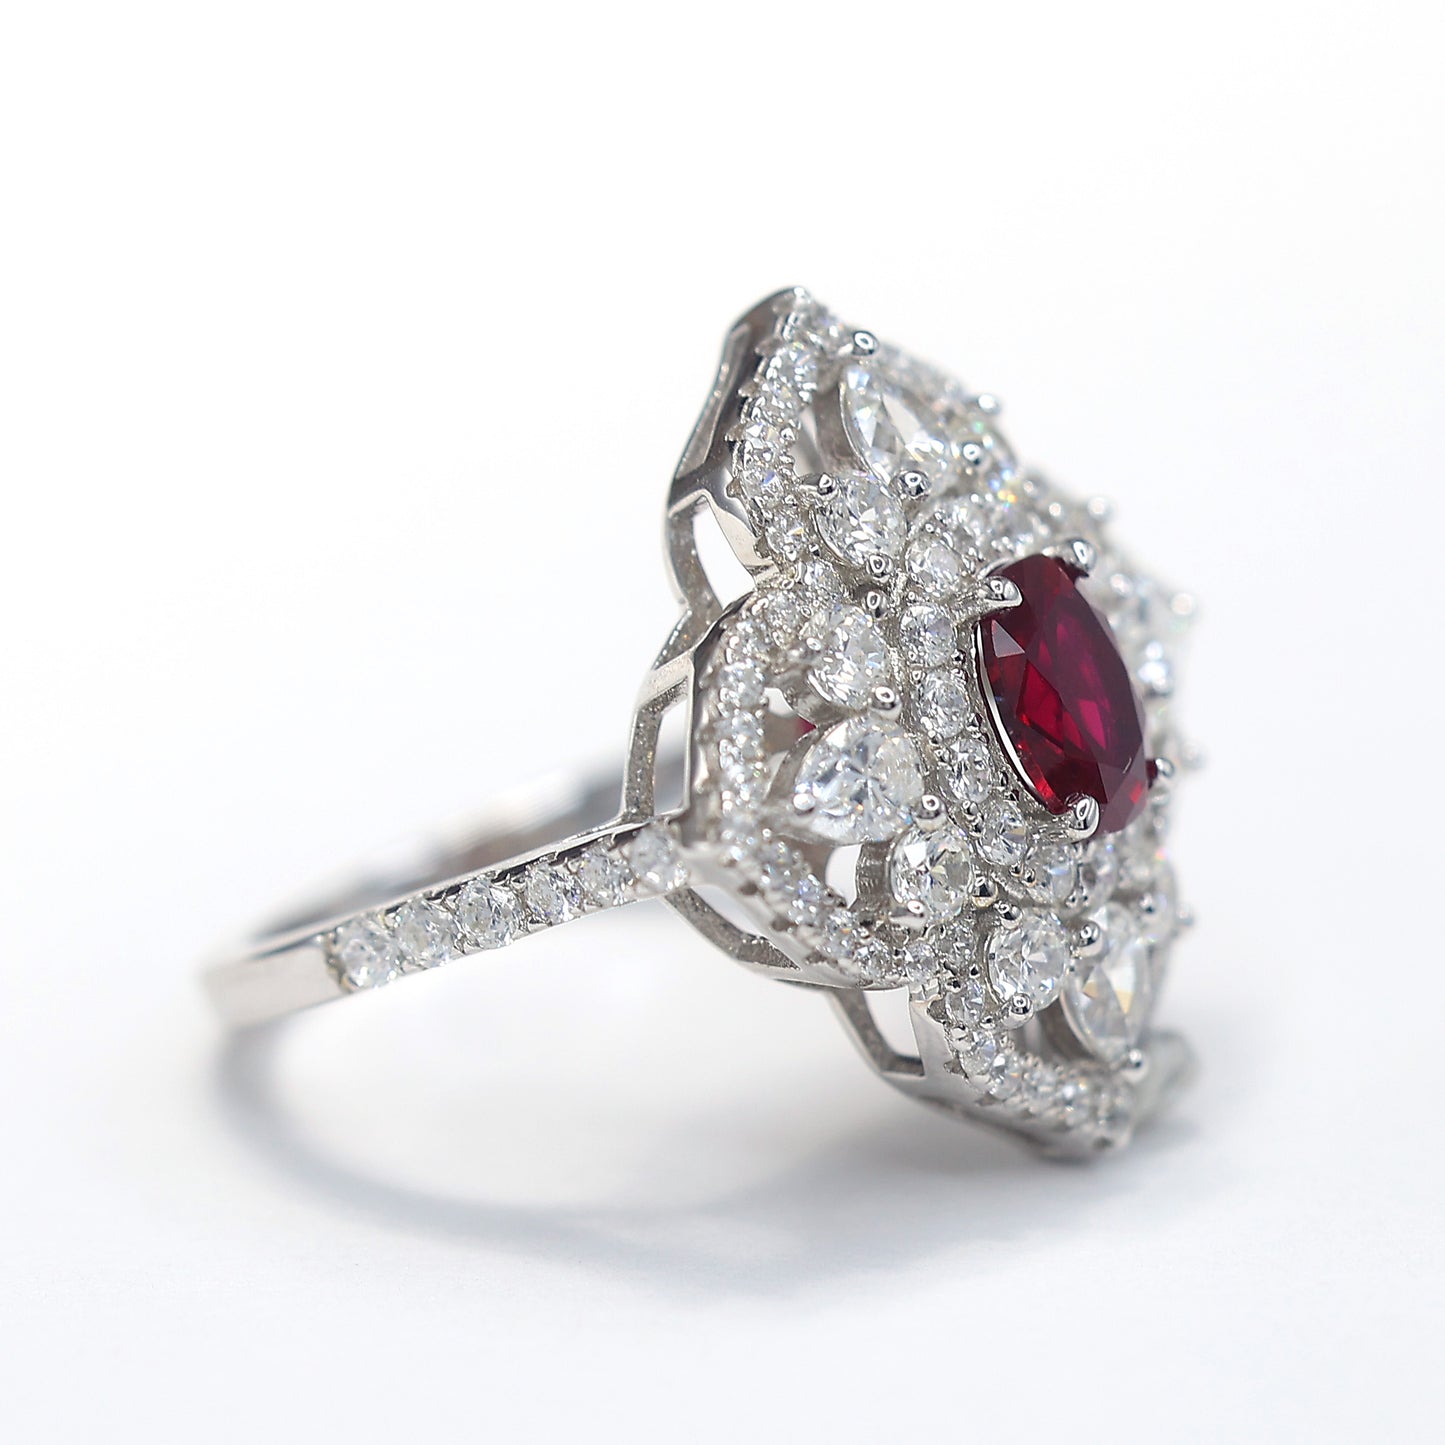 Rubinfarbener Ring mit Mikrofassung in Rubinfarbe, ausgefallener Ring mit vierblättrigem Kleeblatt, Sterlingsilber